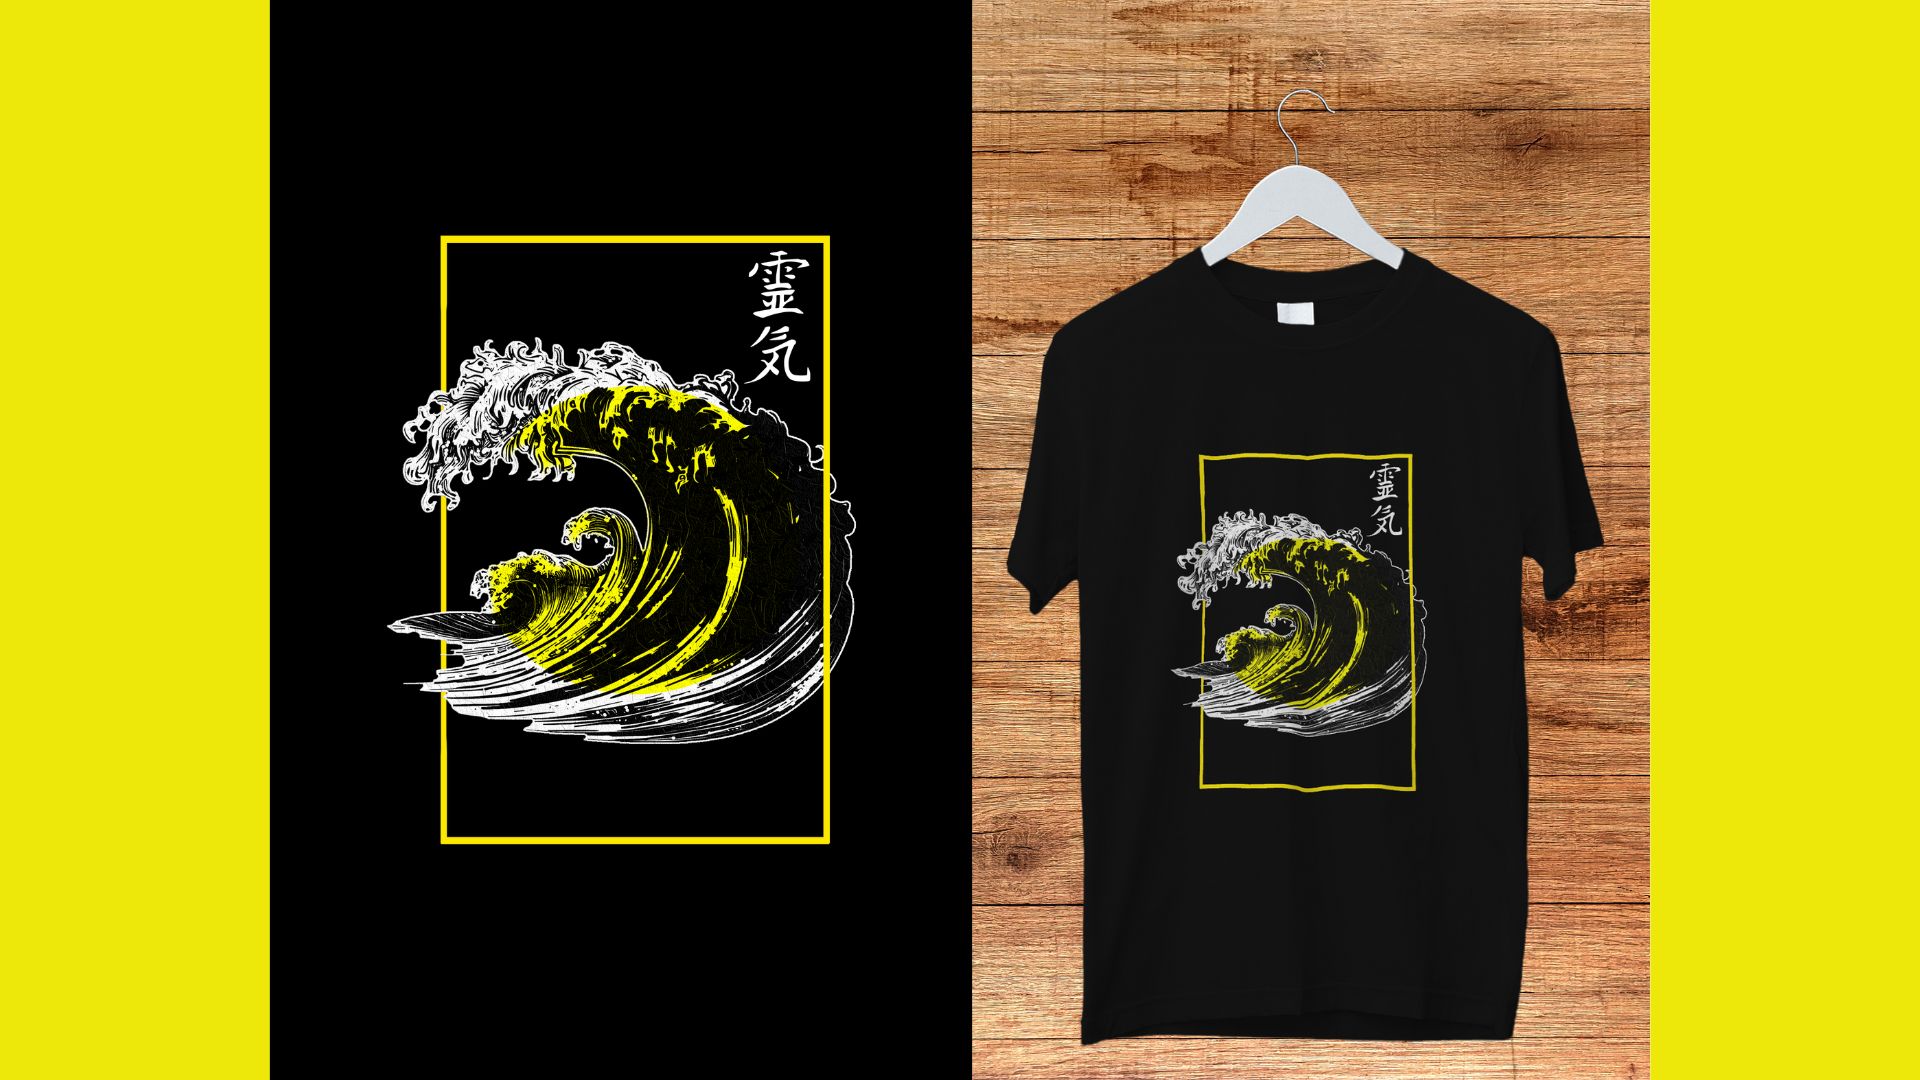 wave streetwear t-shirt design (graphic design) by MF1 STUDIO on 